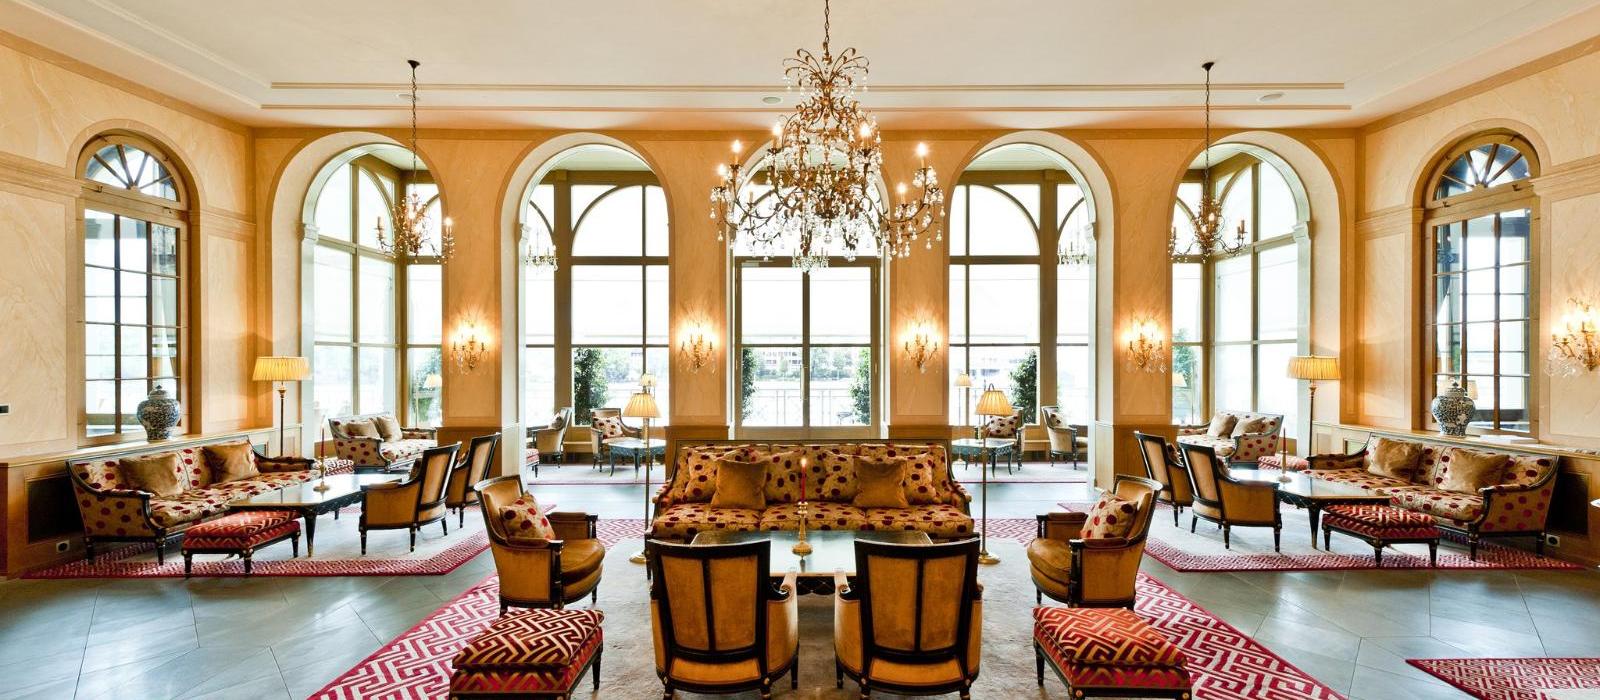 巴塞尔三王大酒店(Grand Hotel Les Trois Rois Basel) 大堂图片  www.lhw.cn